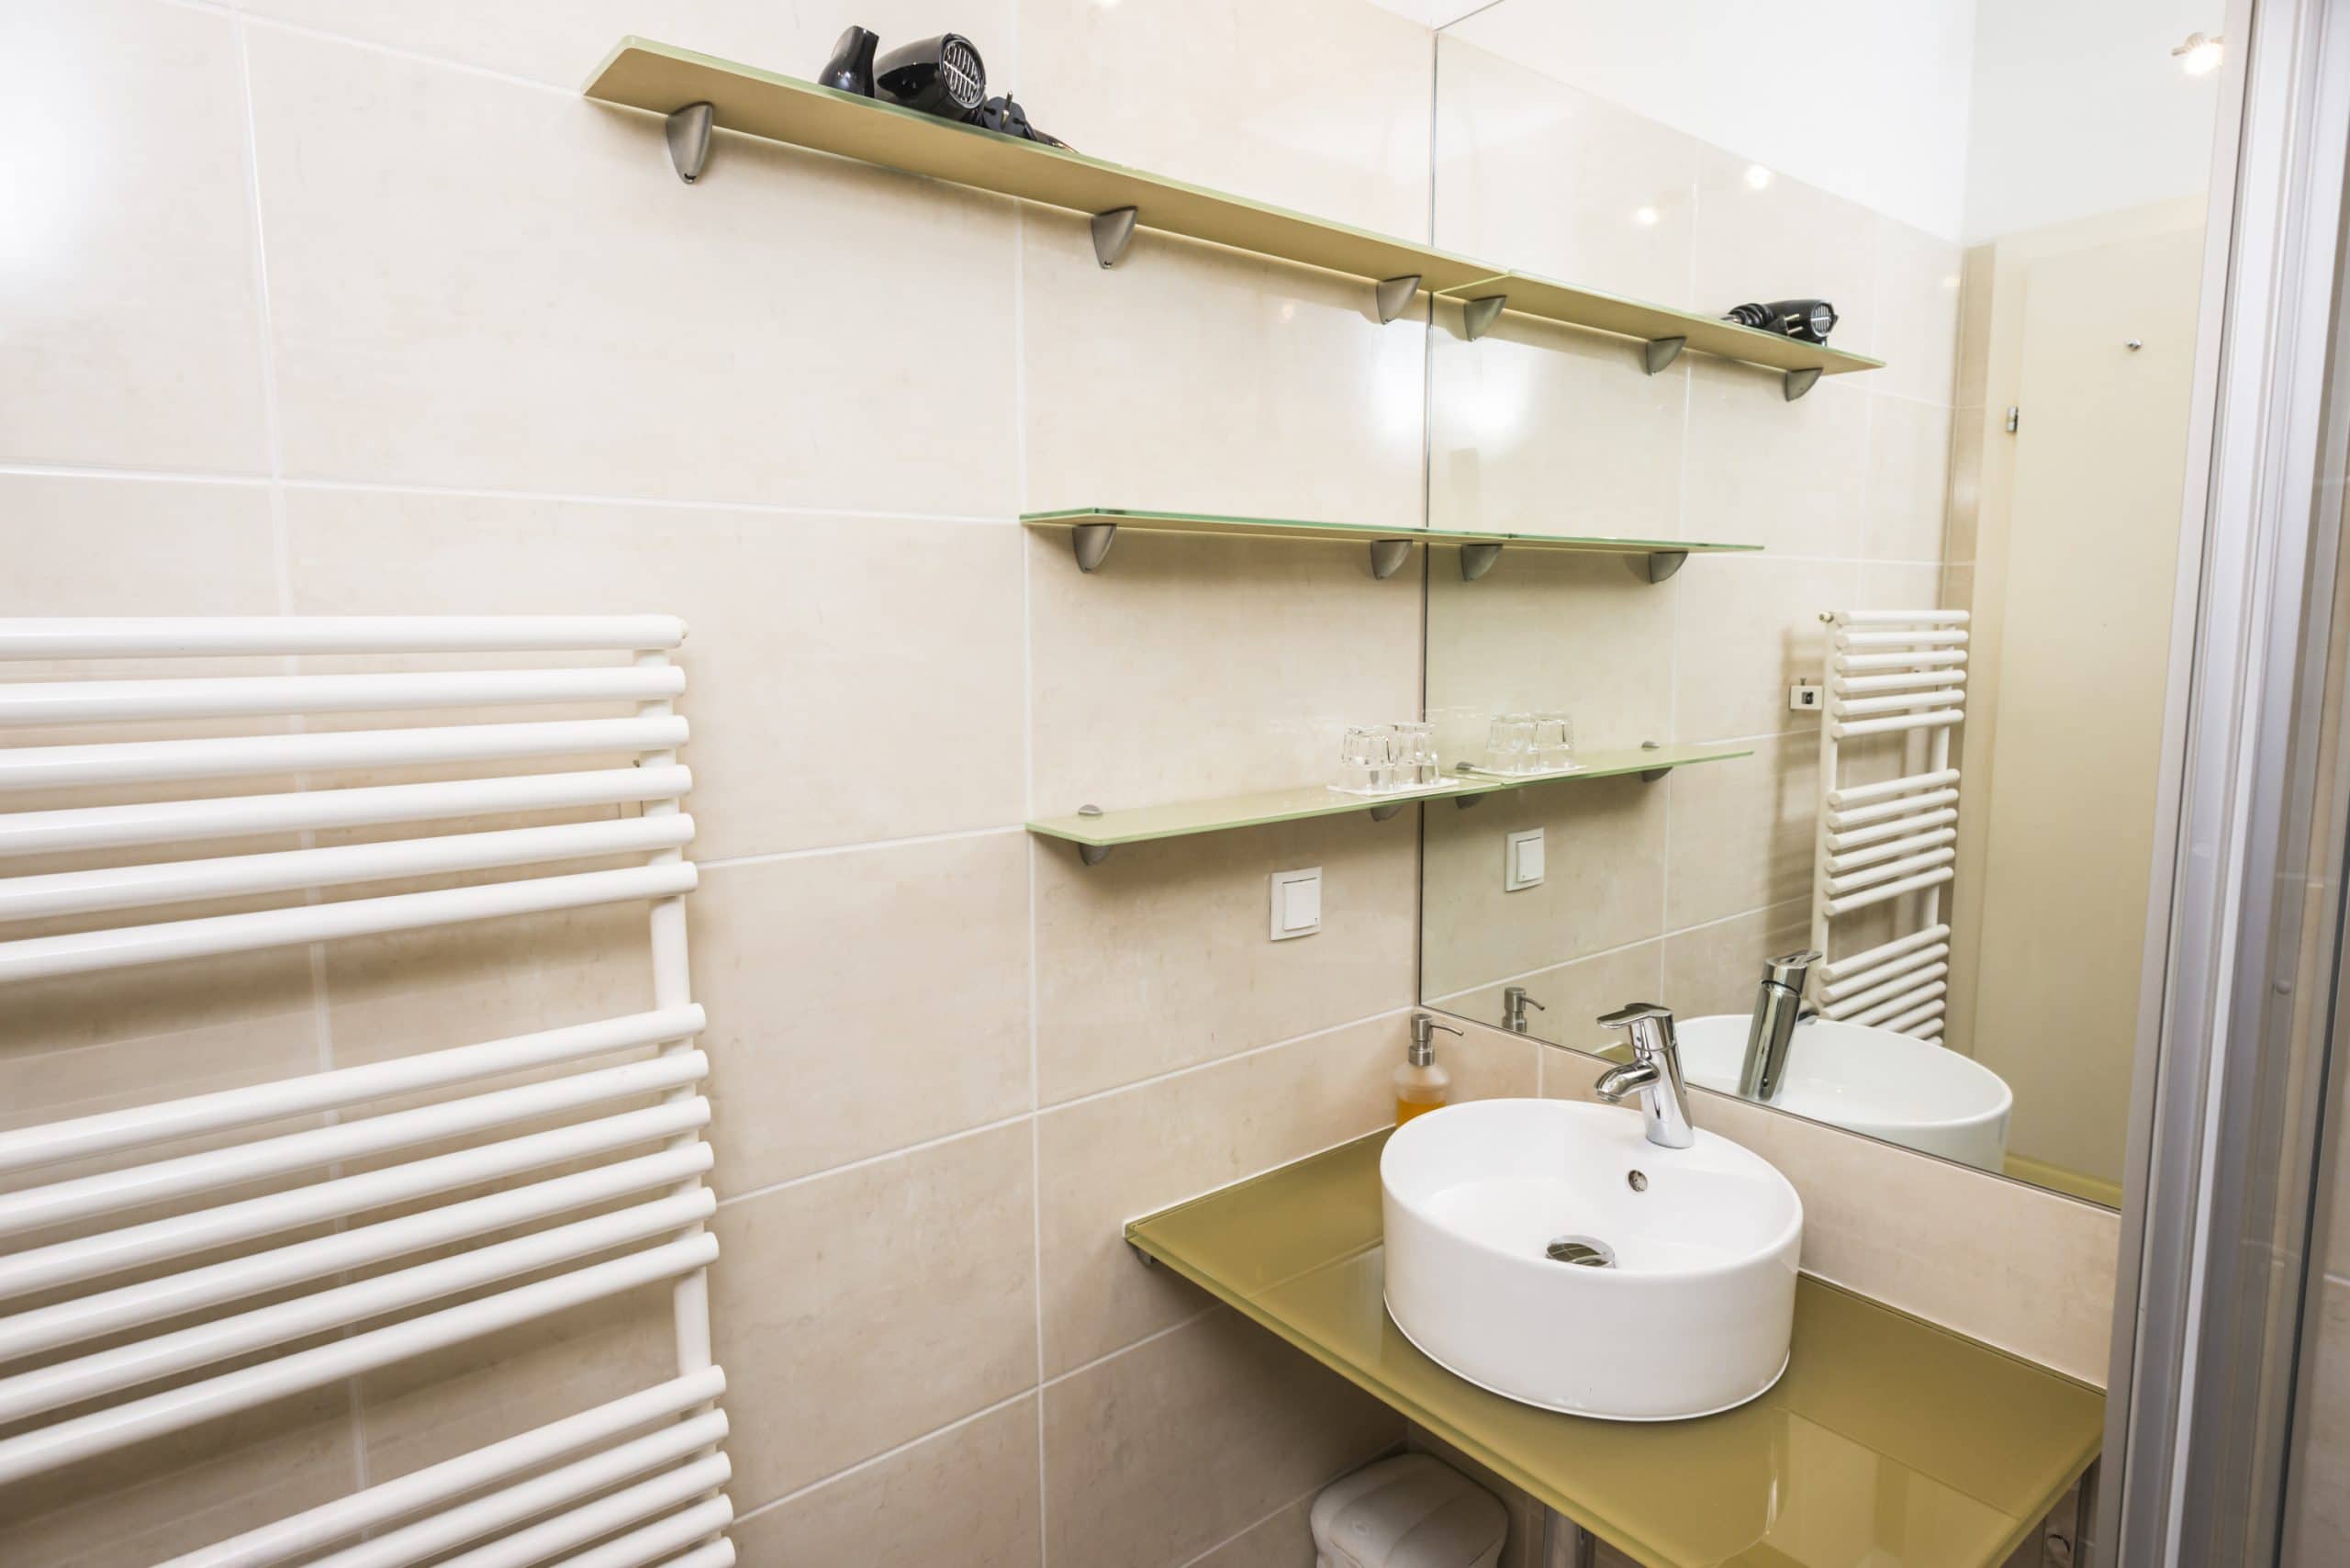 Apartment 6 Bathroom with heated towel rail